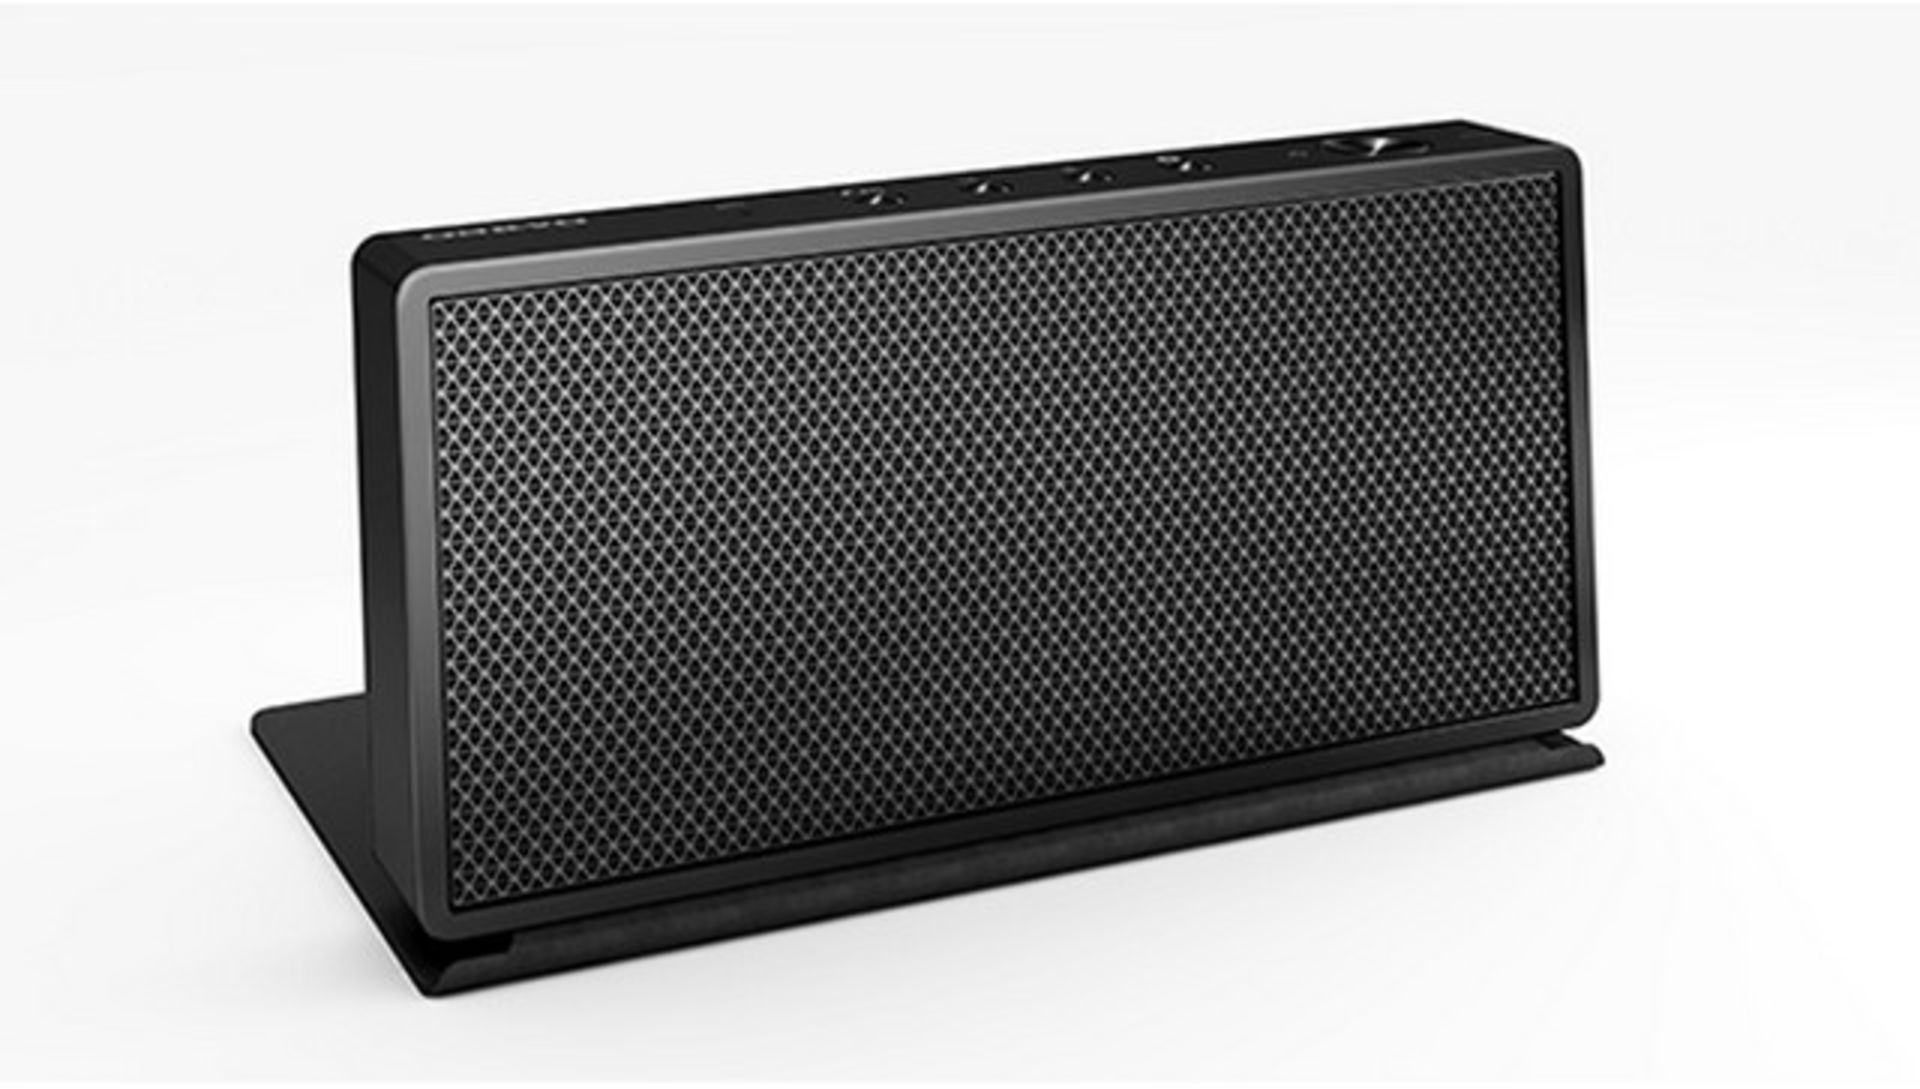 V Brand New Onkyo T3 Lightweight Portable Bluetooth Speaker - Amazon Price £109.00 - 8 Hour